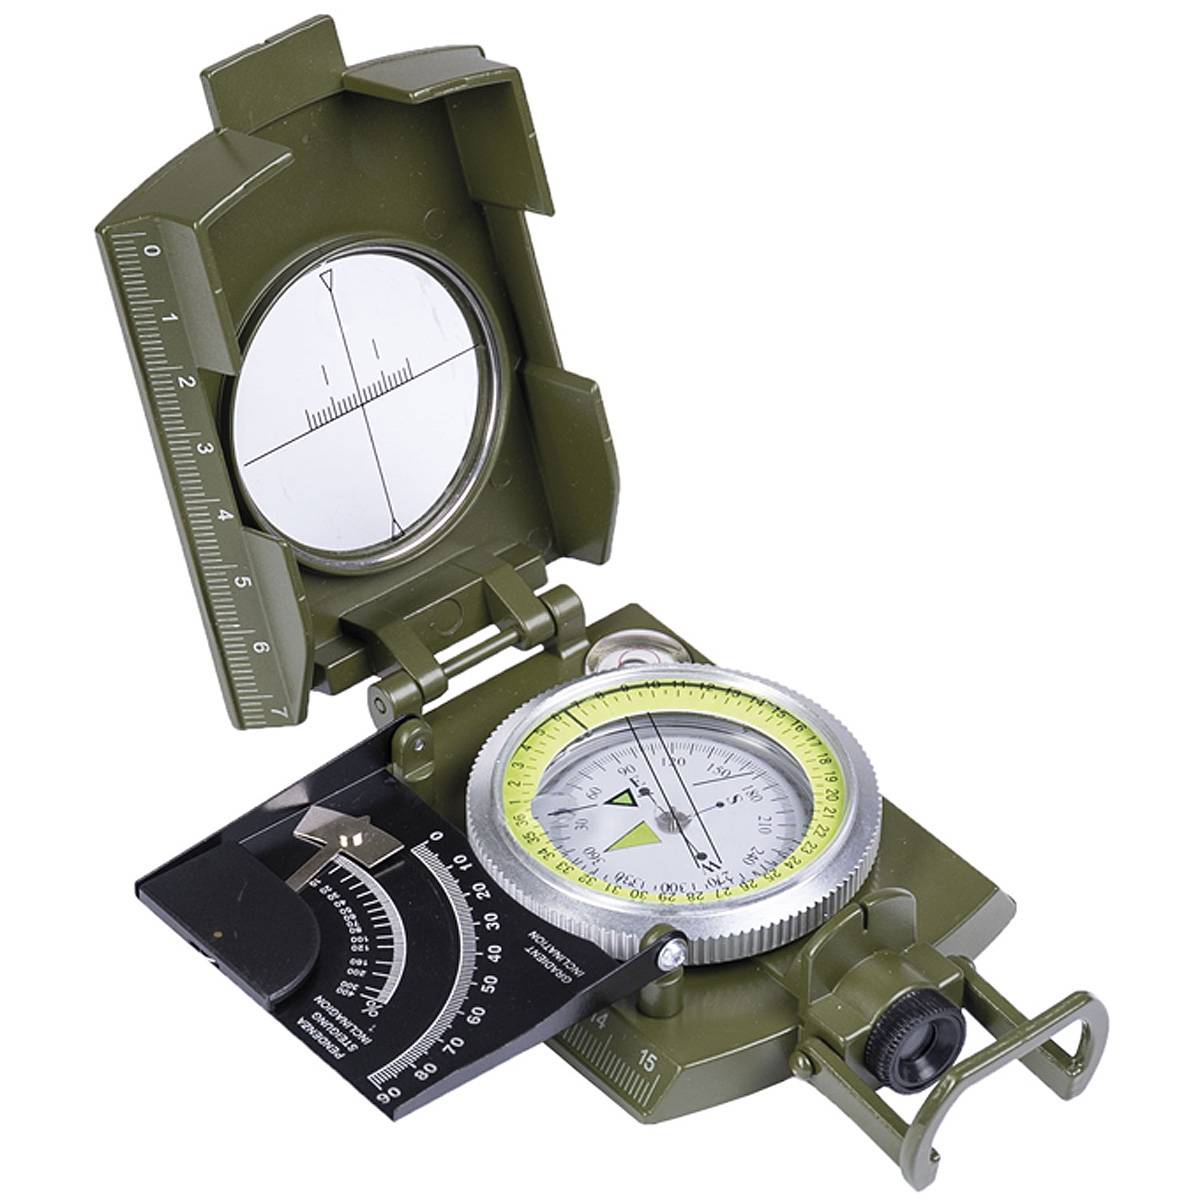 BW Armeekompass mit Etui oliv Kompass Metallgehäuse Marschkompass DE 